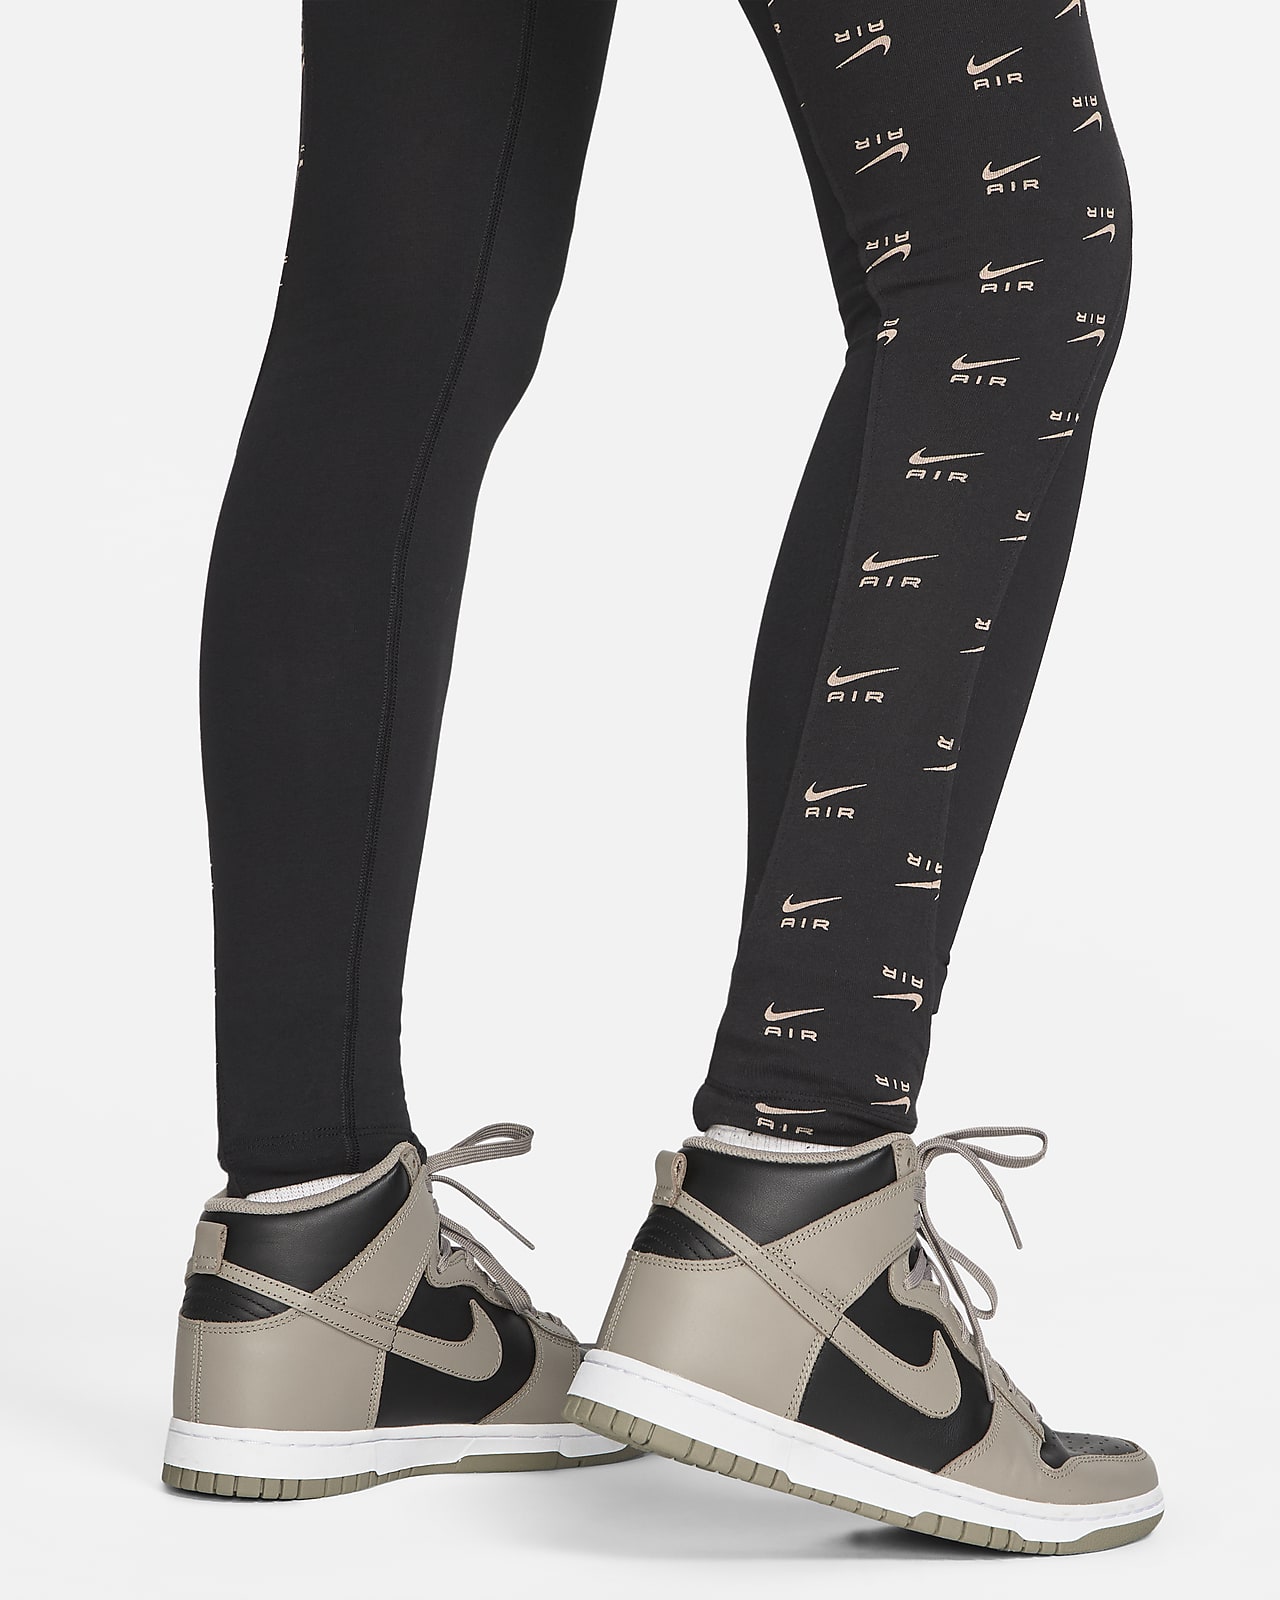 Nike női leggings – Wearzone